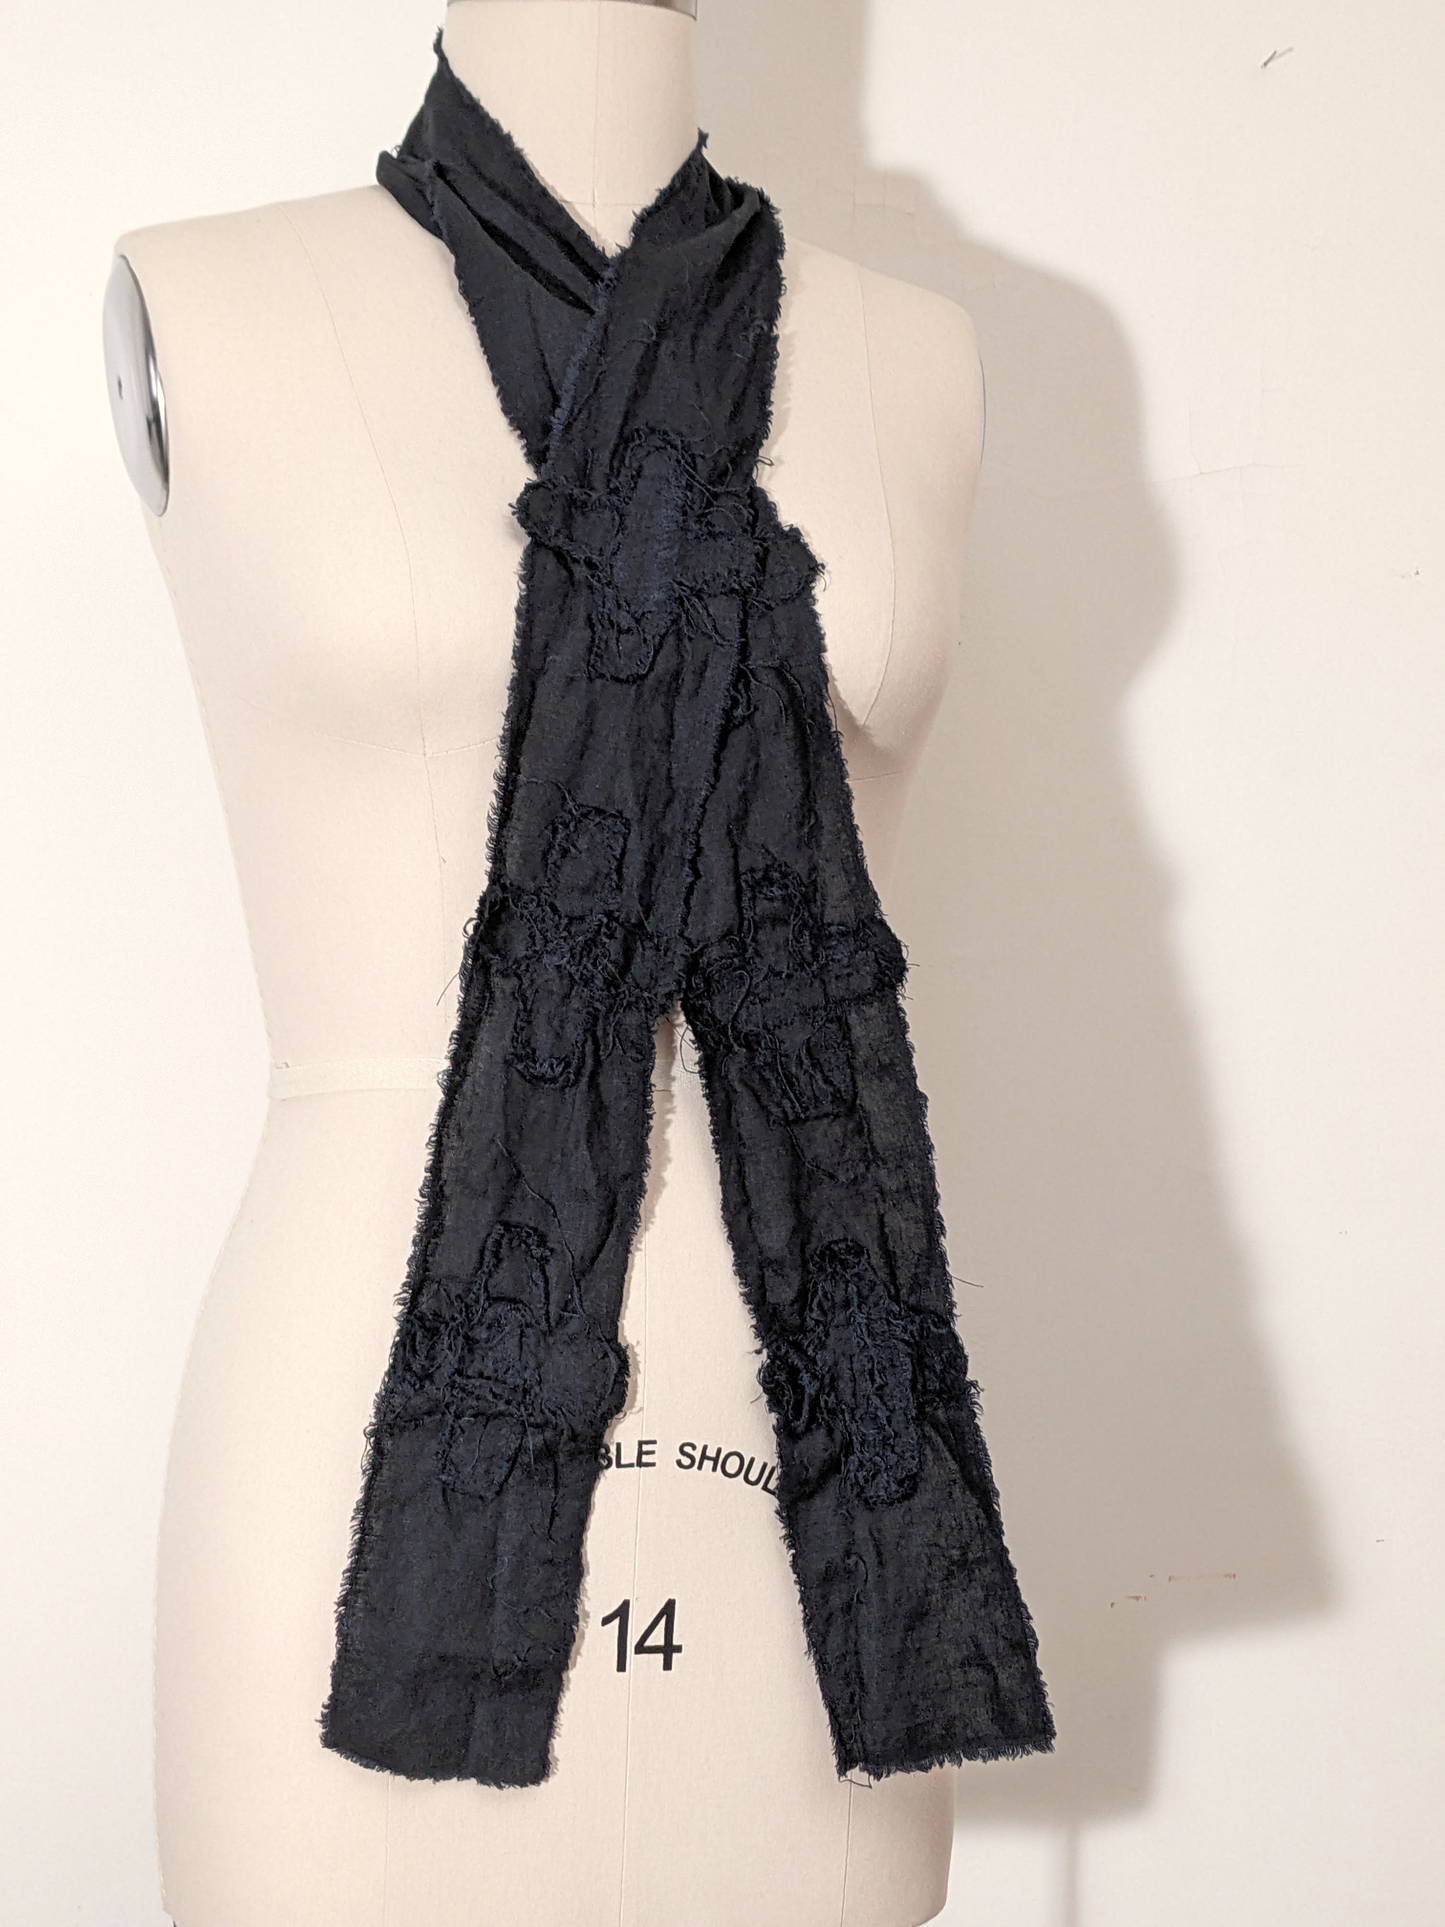 secret lentil scrappy black linen artifacted scarf: long, thin